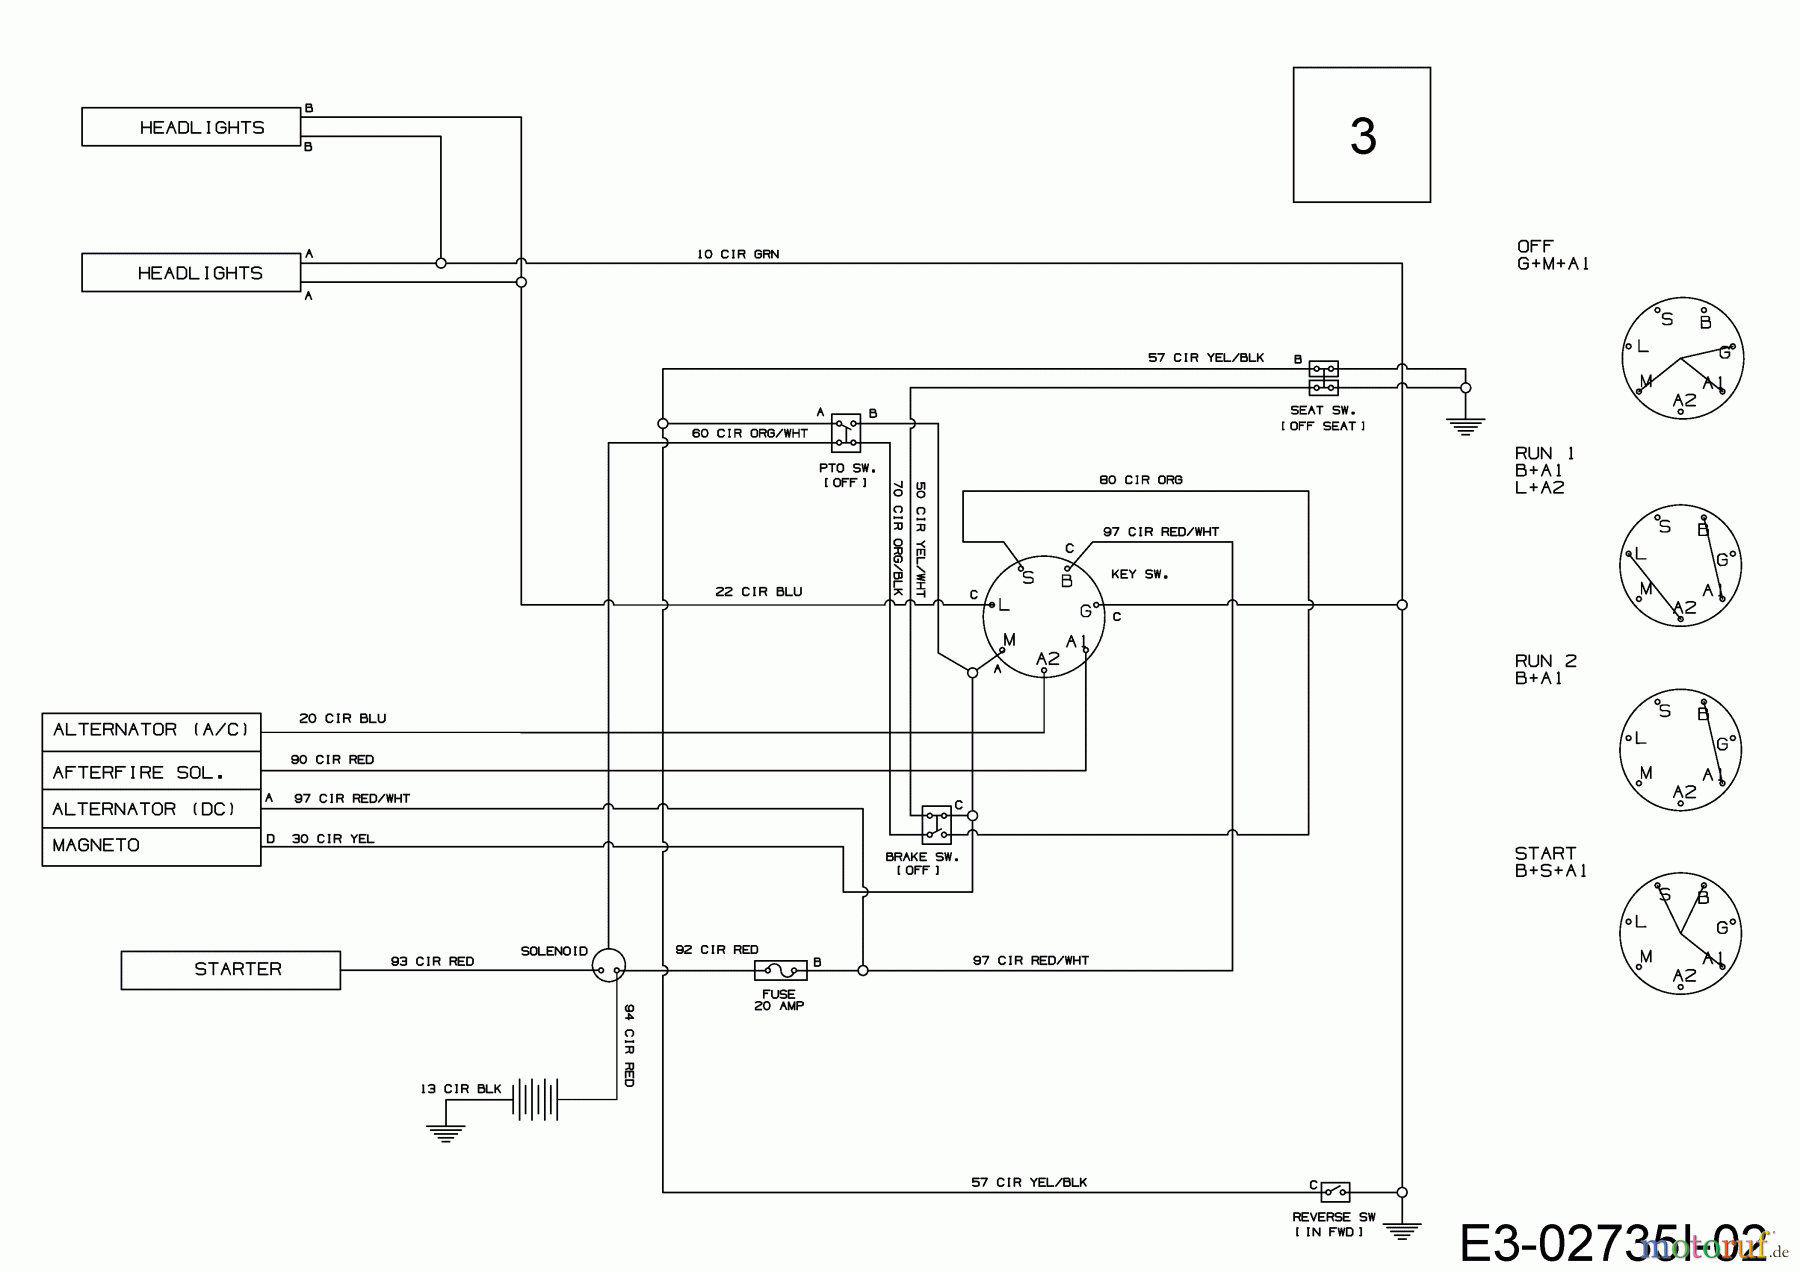  Fair Way Lawn tractors FW 96 13HH761F617  (2015) Wiring diagram